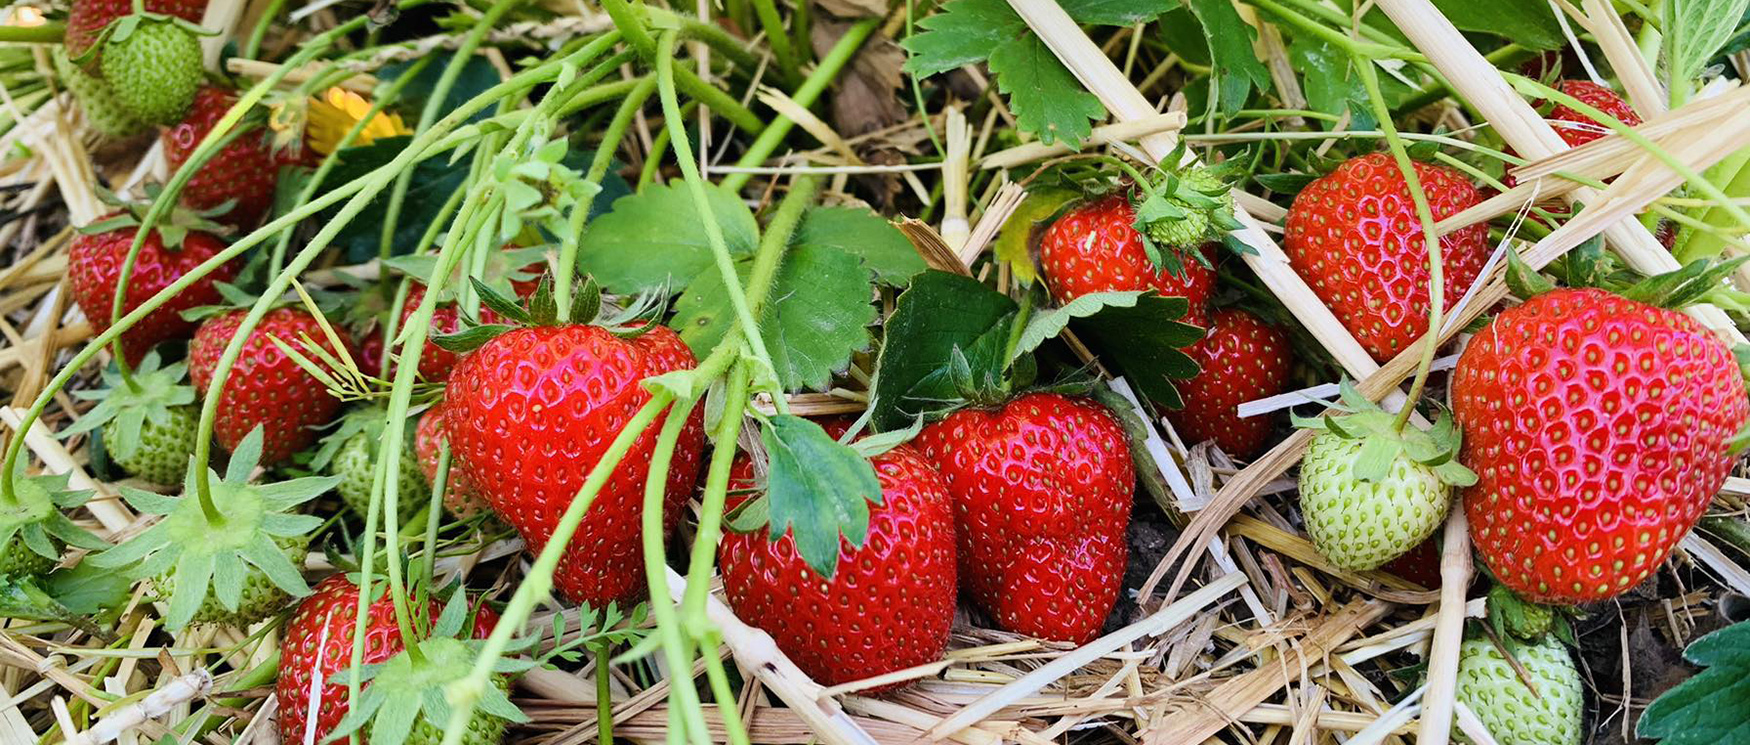 Pickwell Farm strawberries